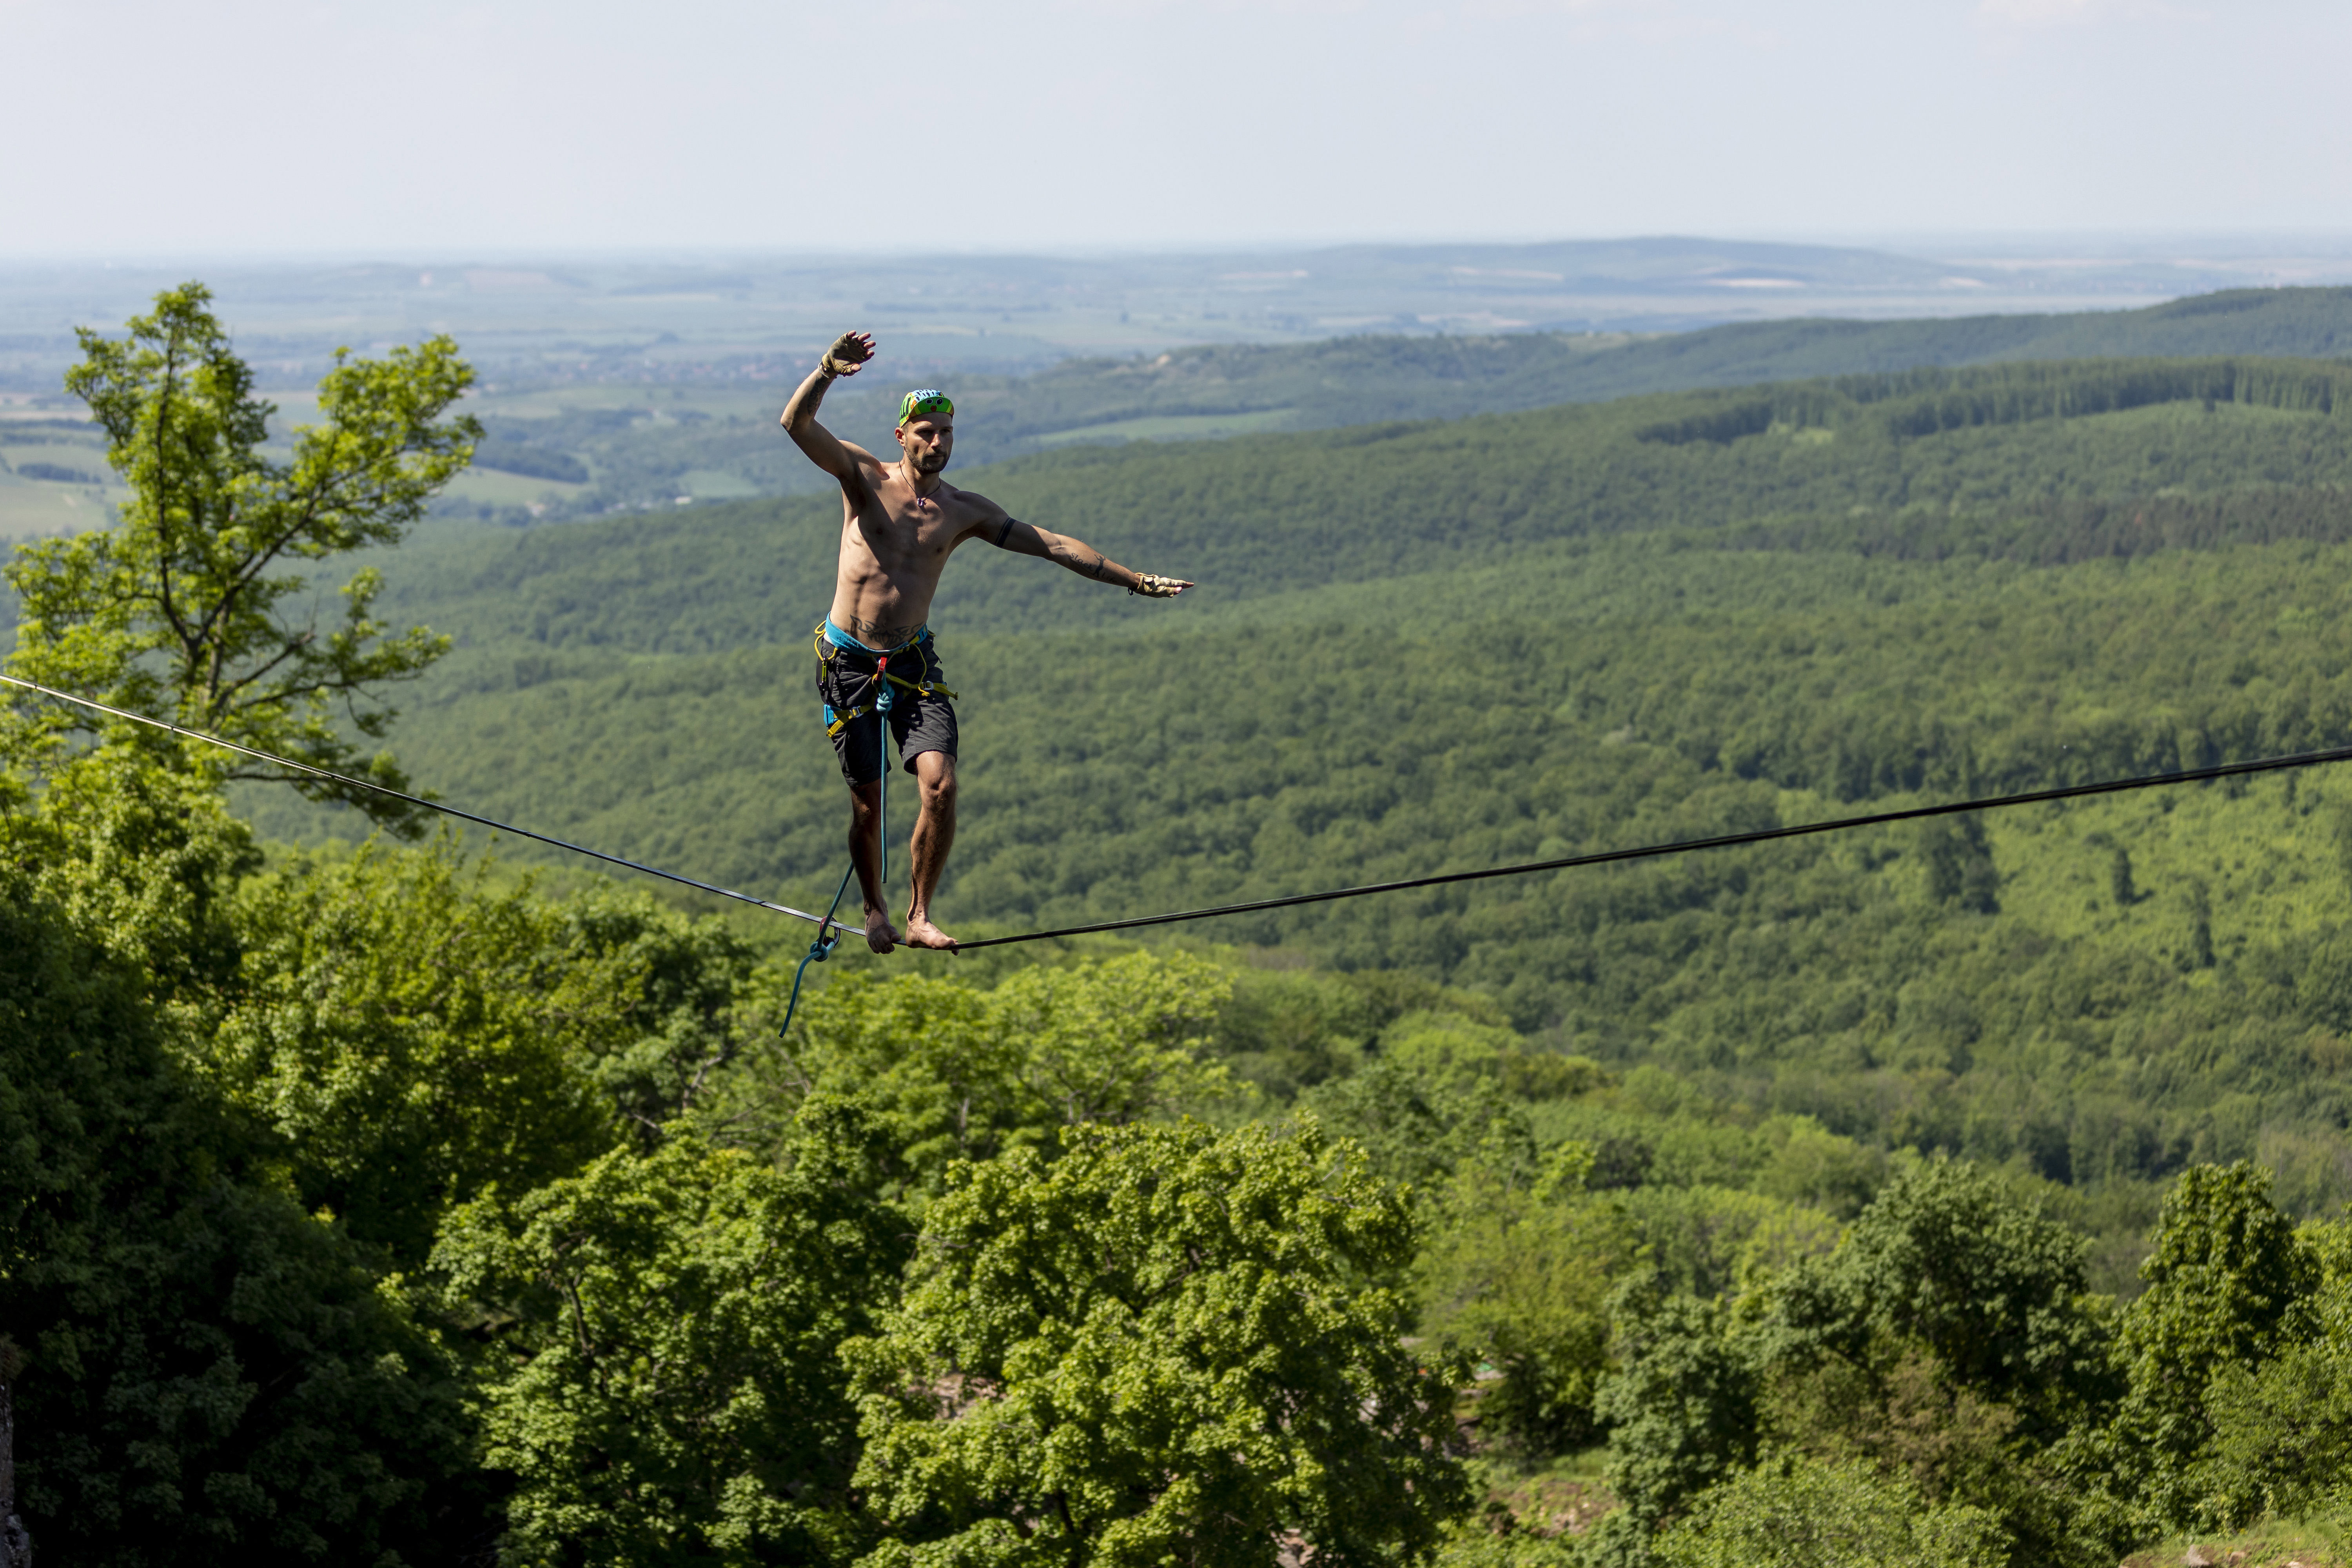 KisGeri 24 Rock climbing and Highline Festival u Mađarskoj